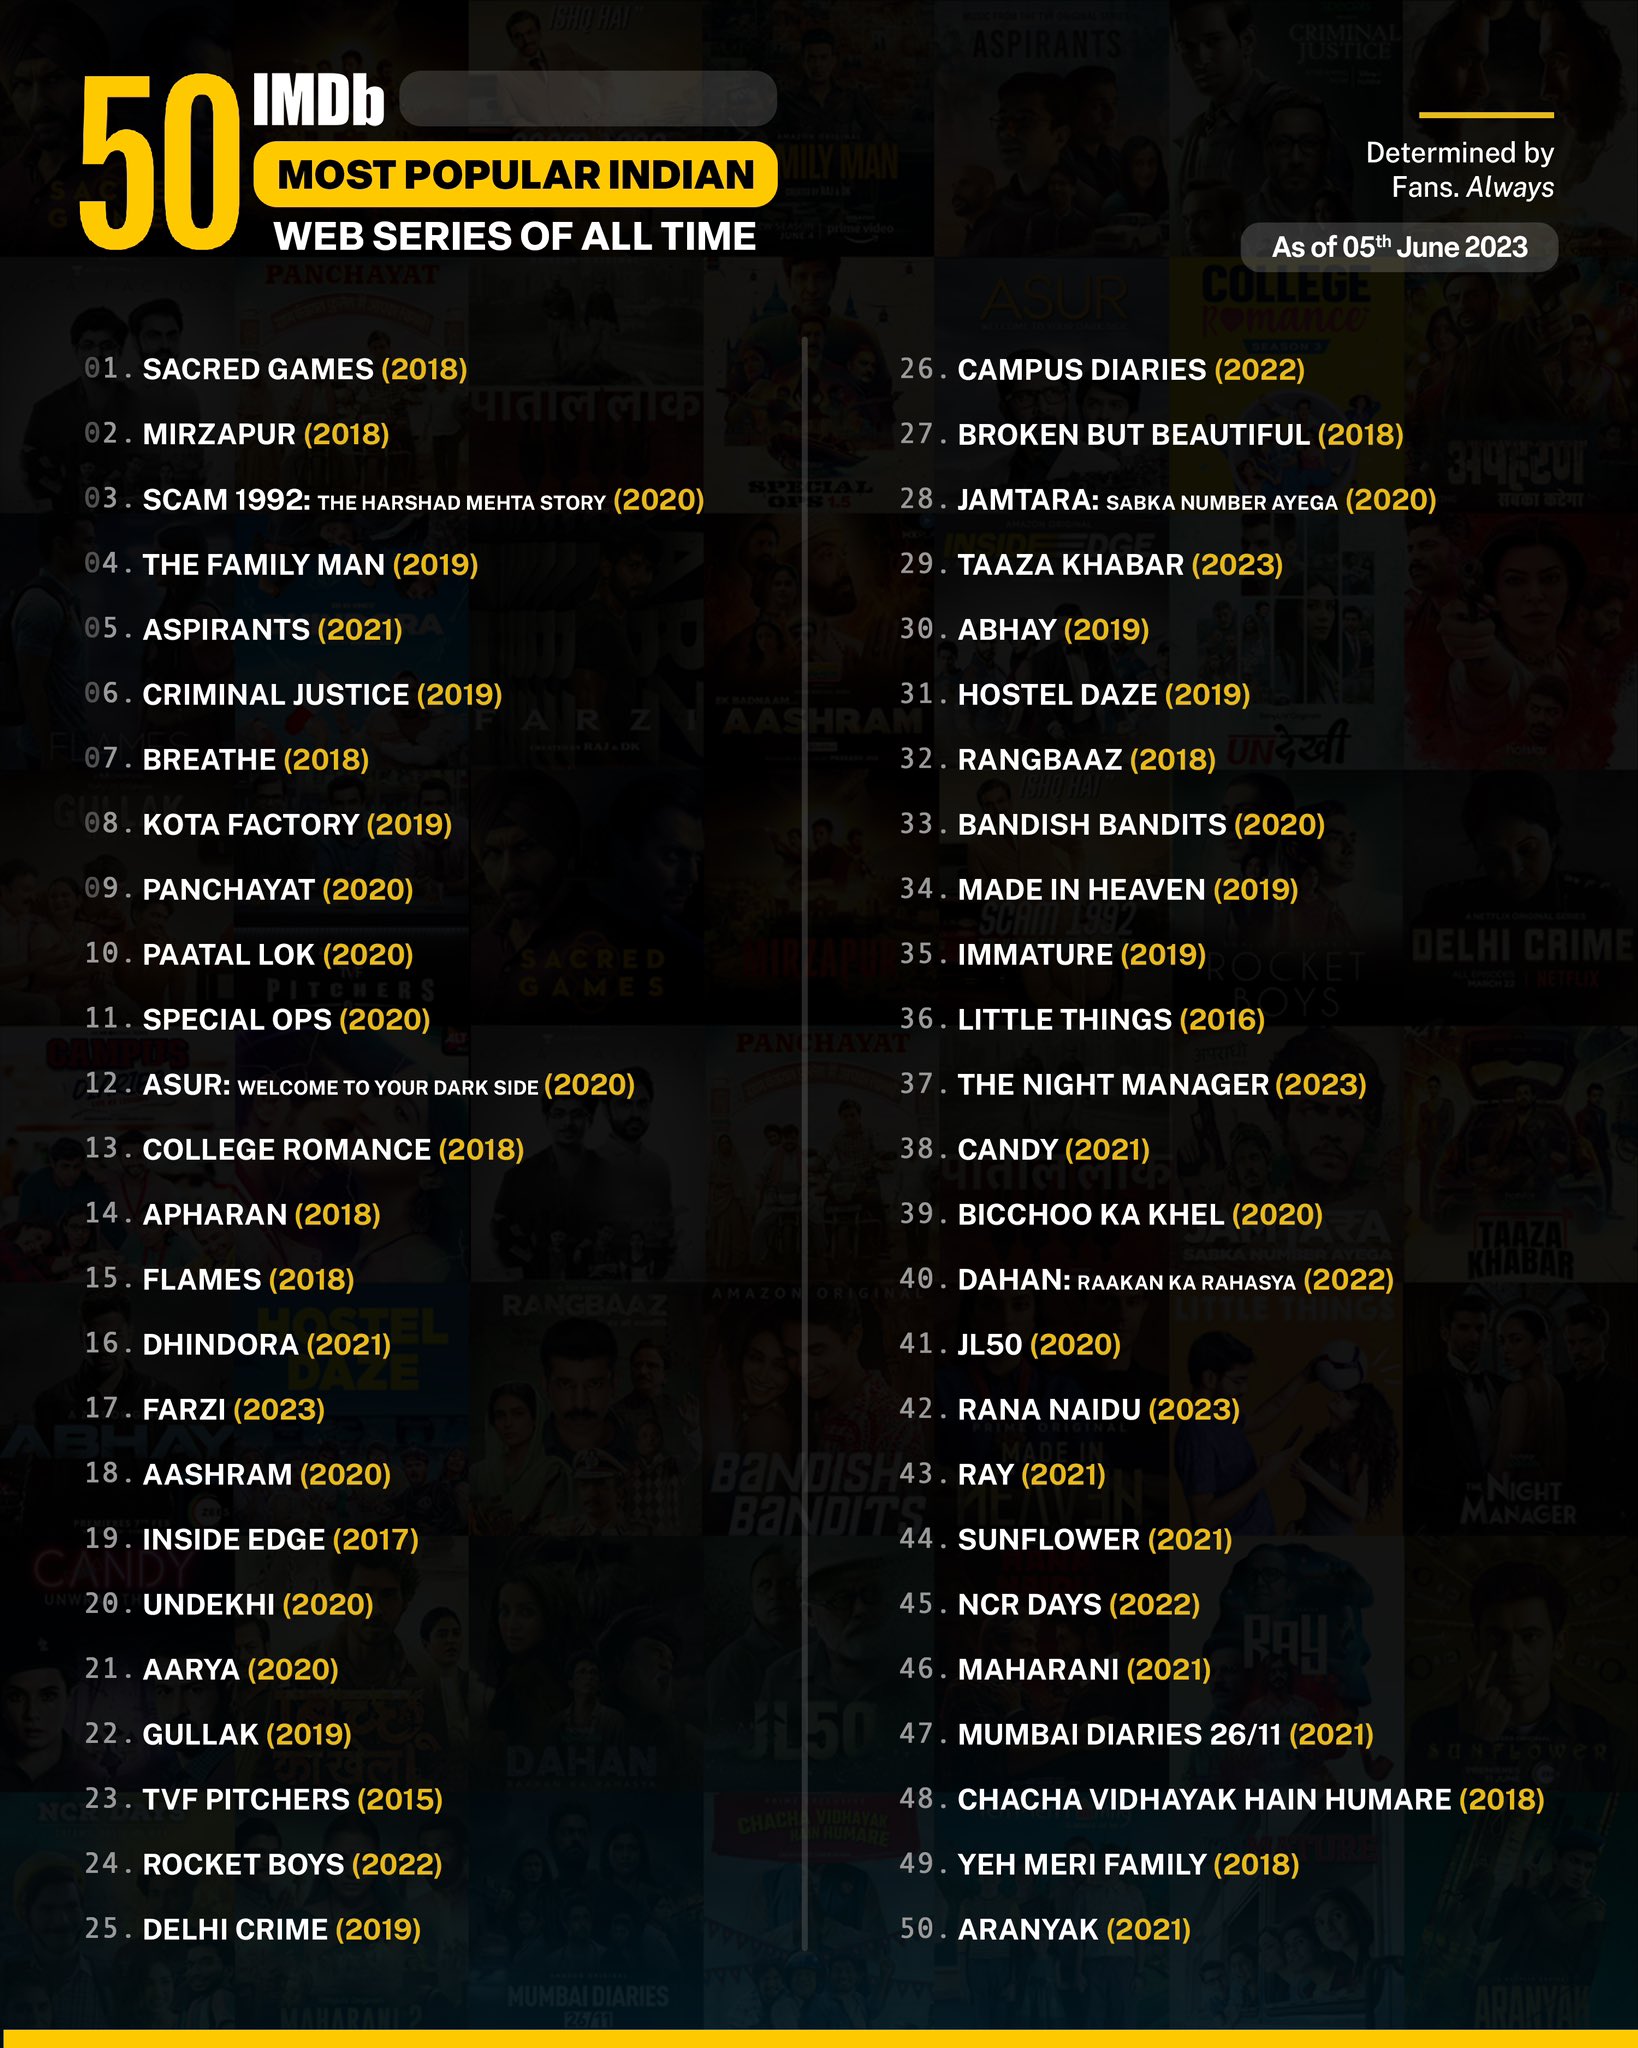 TOP 5 Indian WEB SERIES Beyond Imagination IMDB Highest Rating (Part 15) 